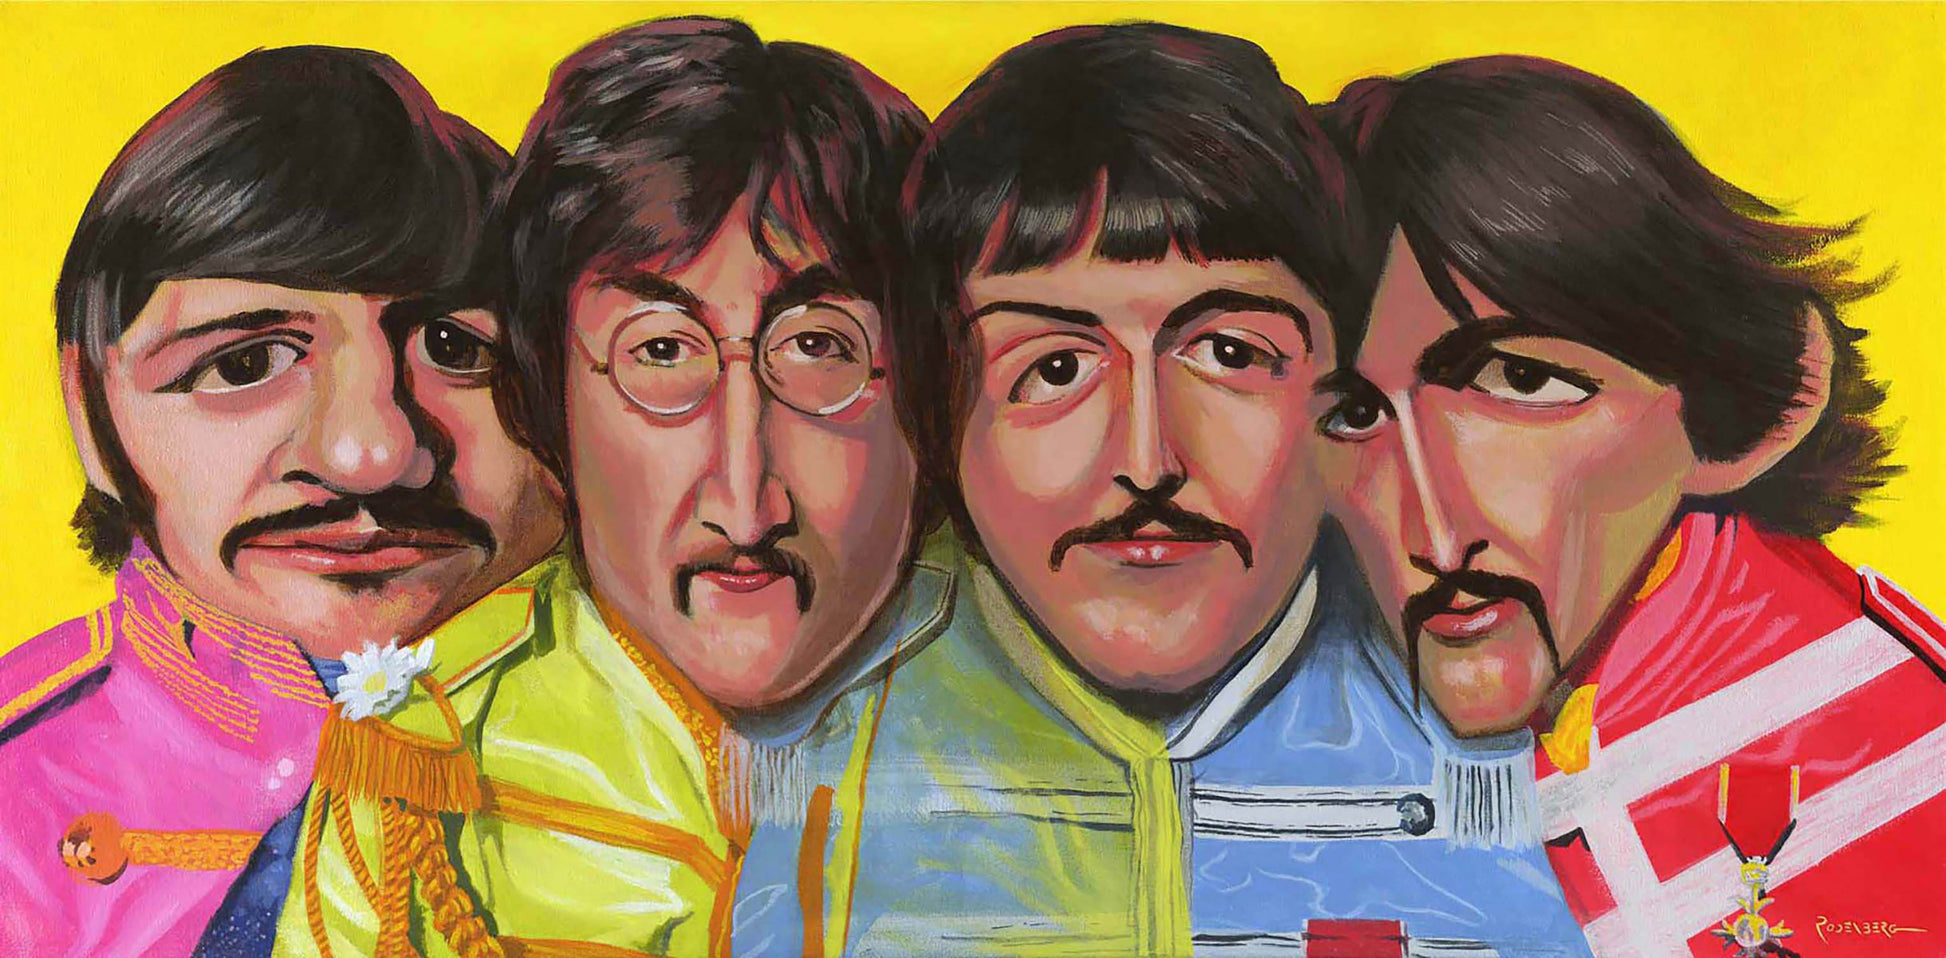  Beatles portrait painting art print by Jeff Rodenberg